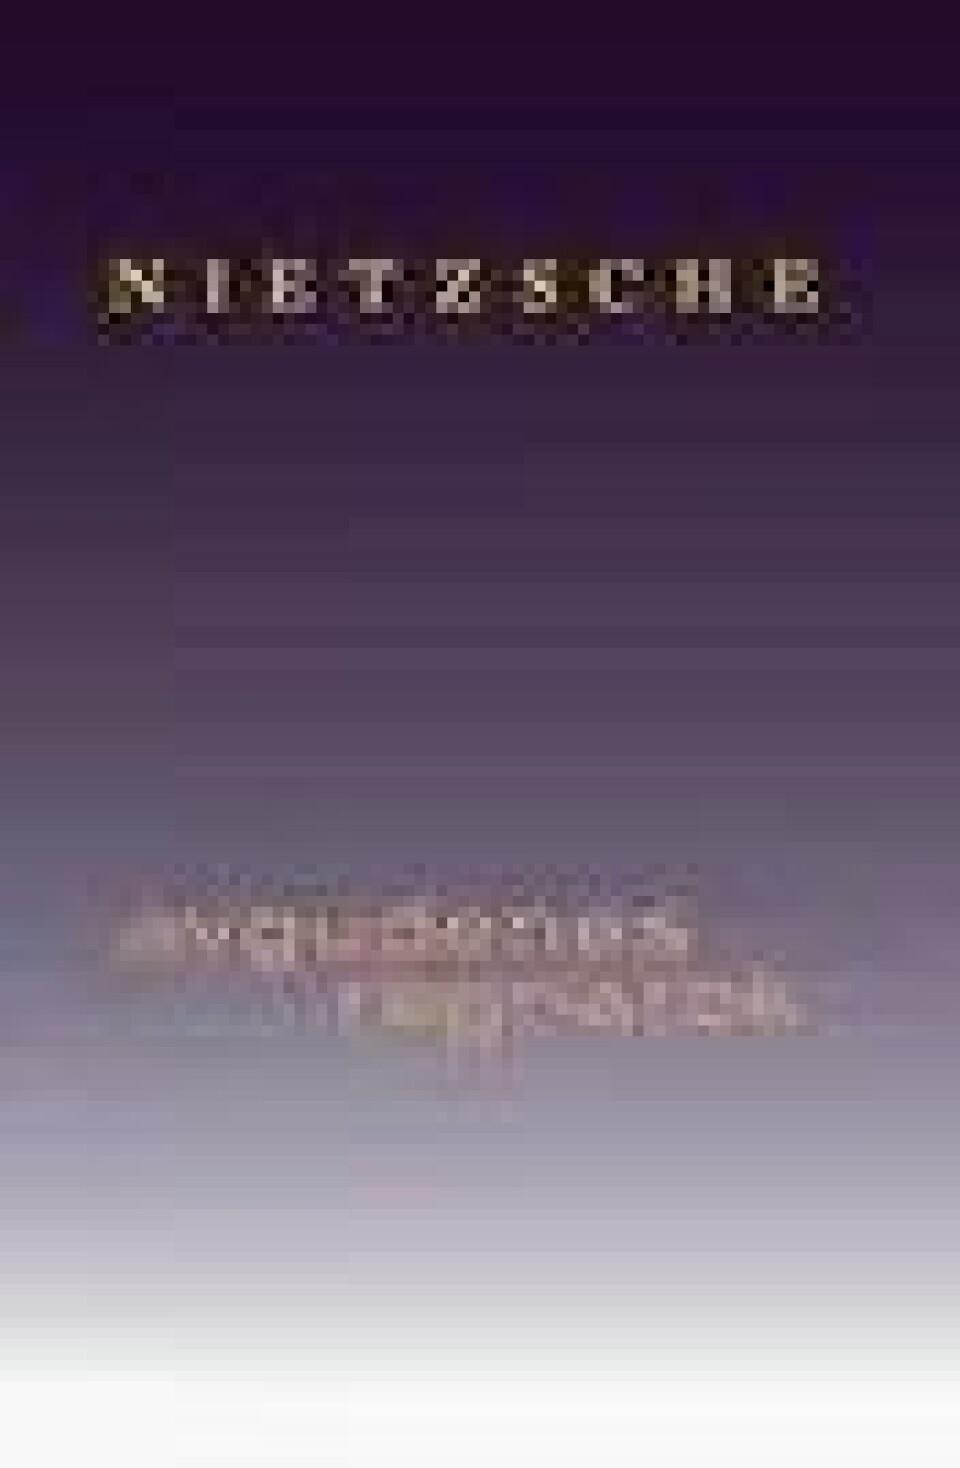 Bok: Avgudenes ragnarok; eller hvordan man ﬁlosoferer med hammeren – Friedrich Nietzsche — Oversatt av Eric Lawrence Wiik; Spartacus, Oslo 2009     

  Fra: Arr – 3–4 2009 — http://arrvev.com